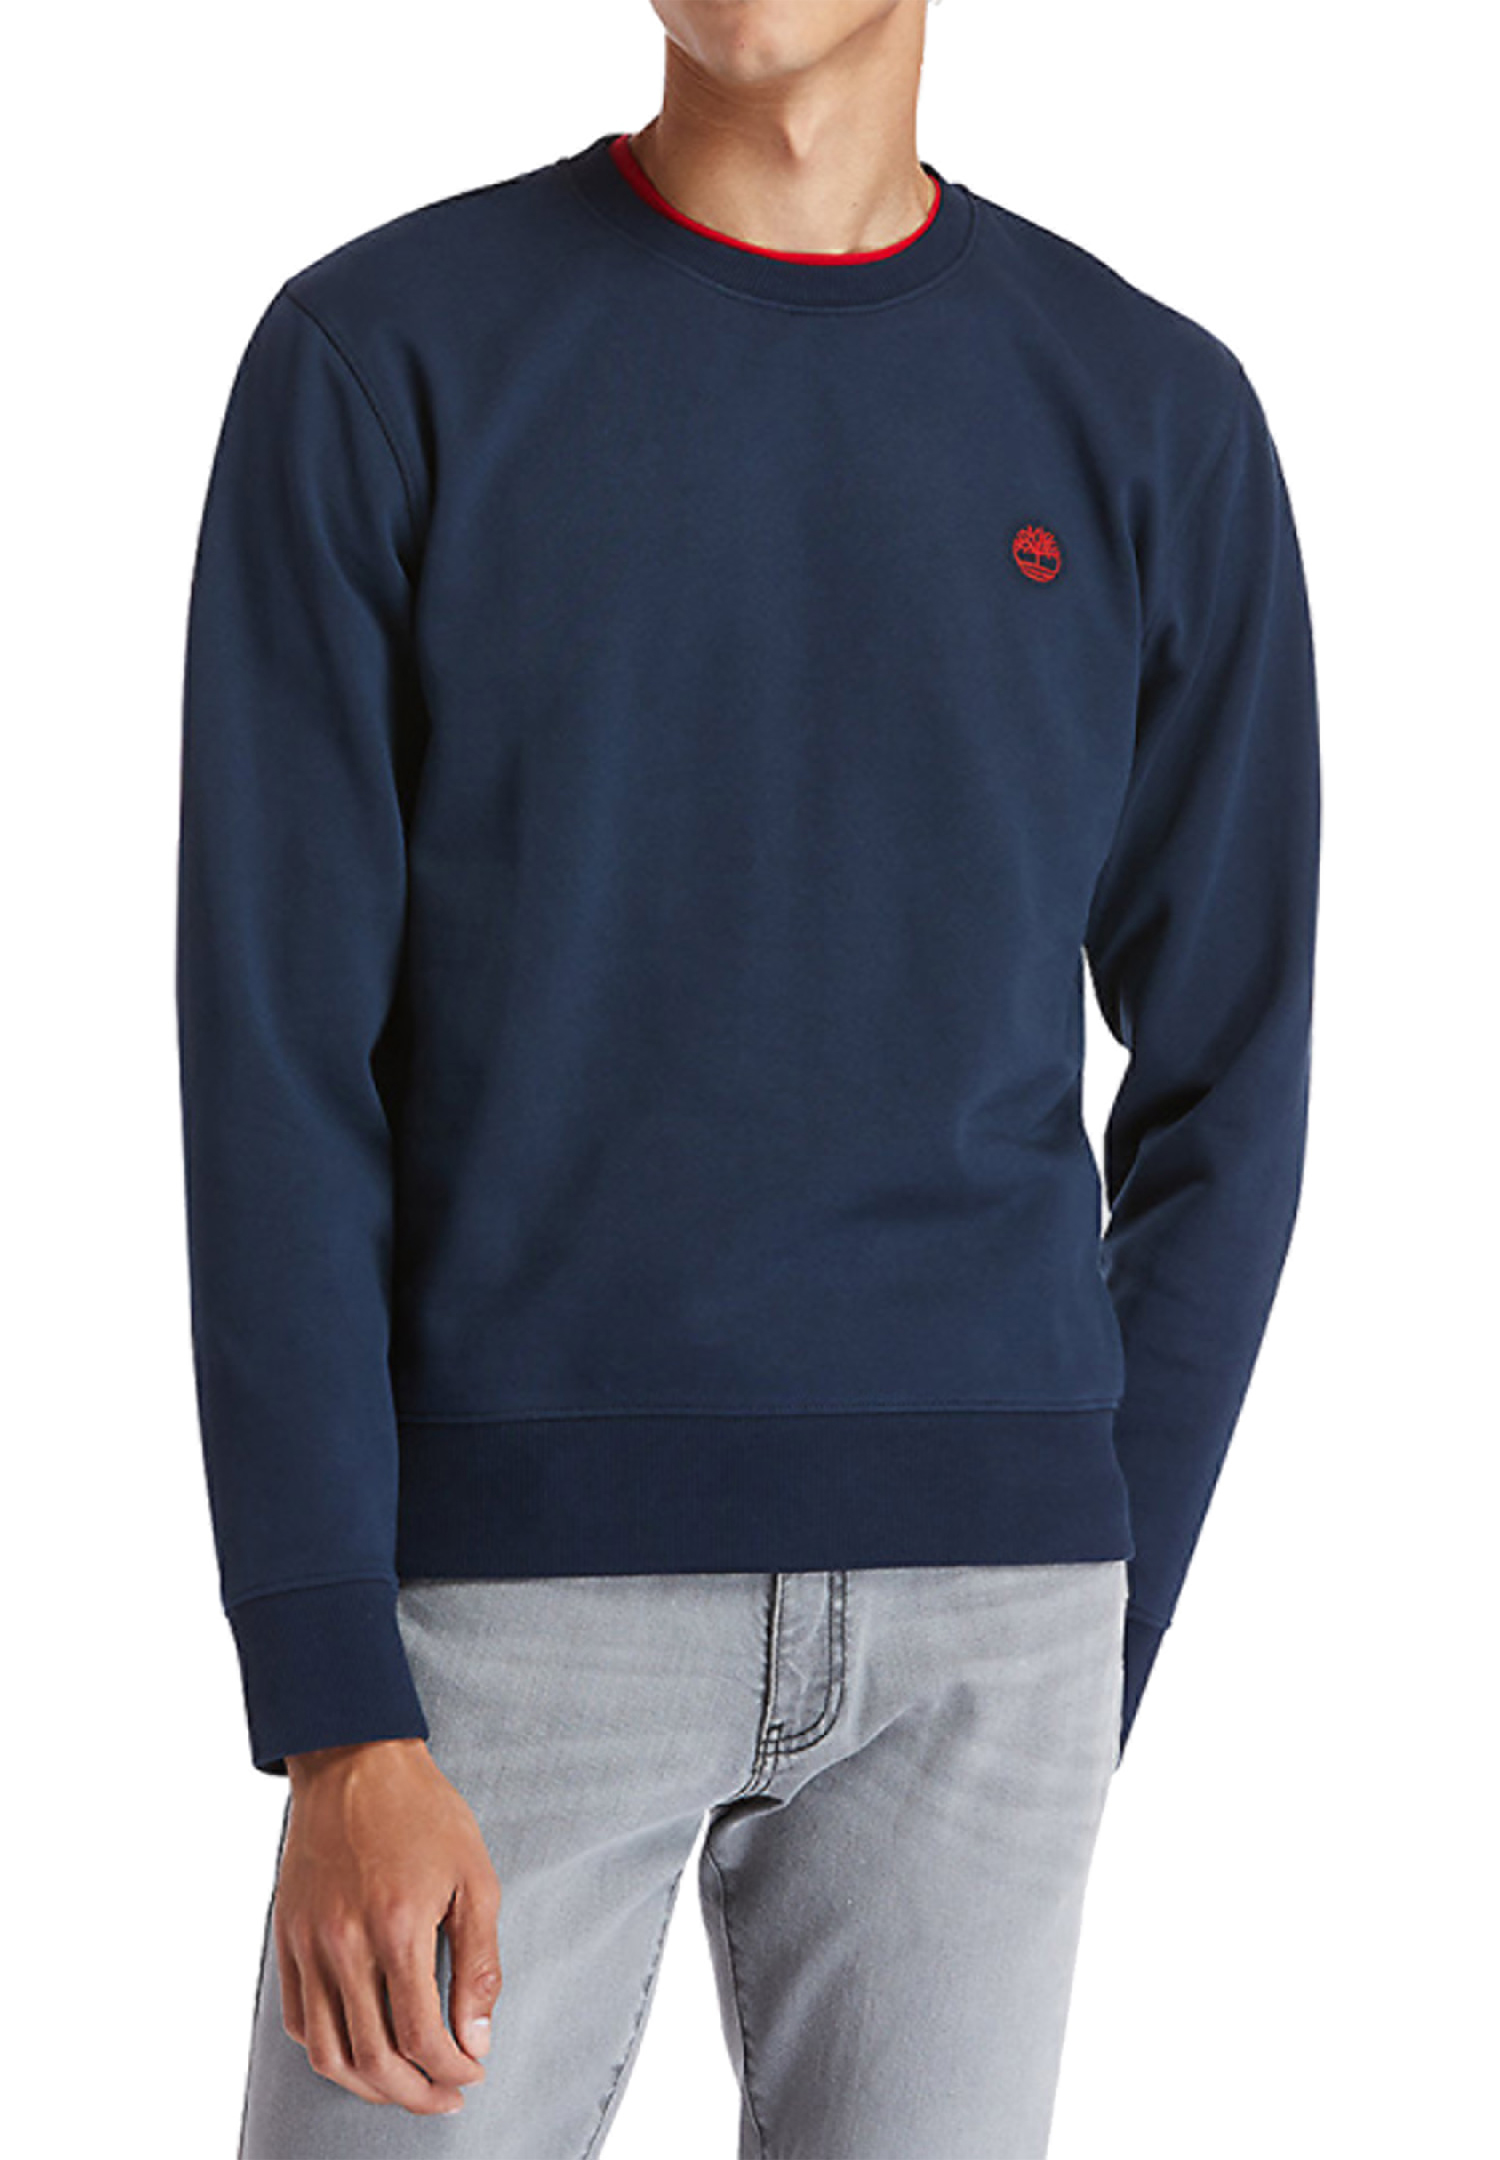 Timberland OYSTER R CREW SWEAT Herren Sweatshirt Pullover TB0A2AM6 blau